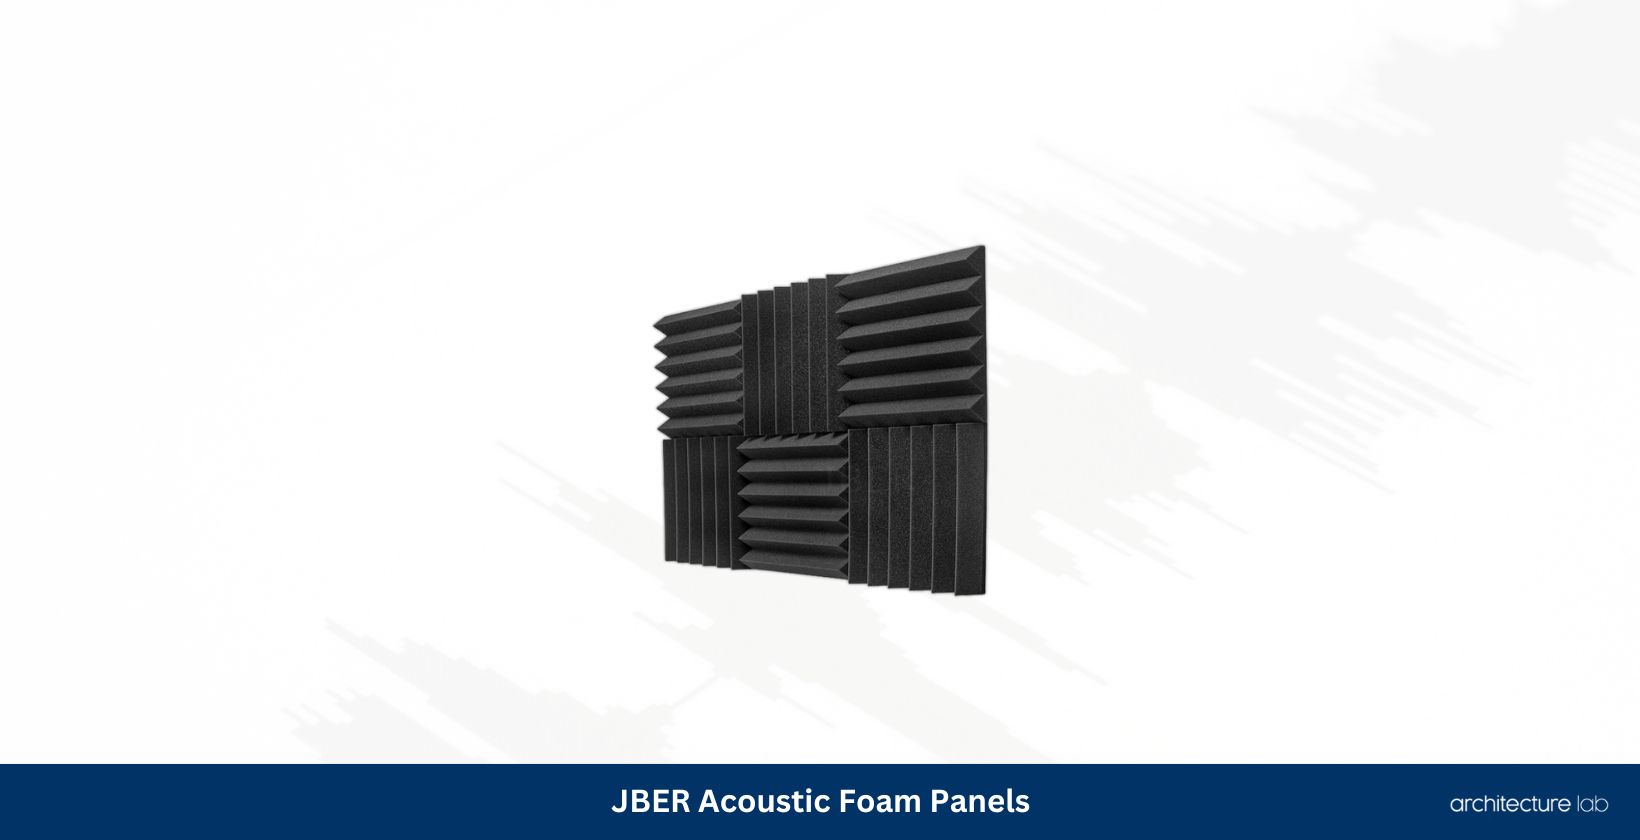 Jber acoustic foam panels